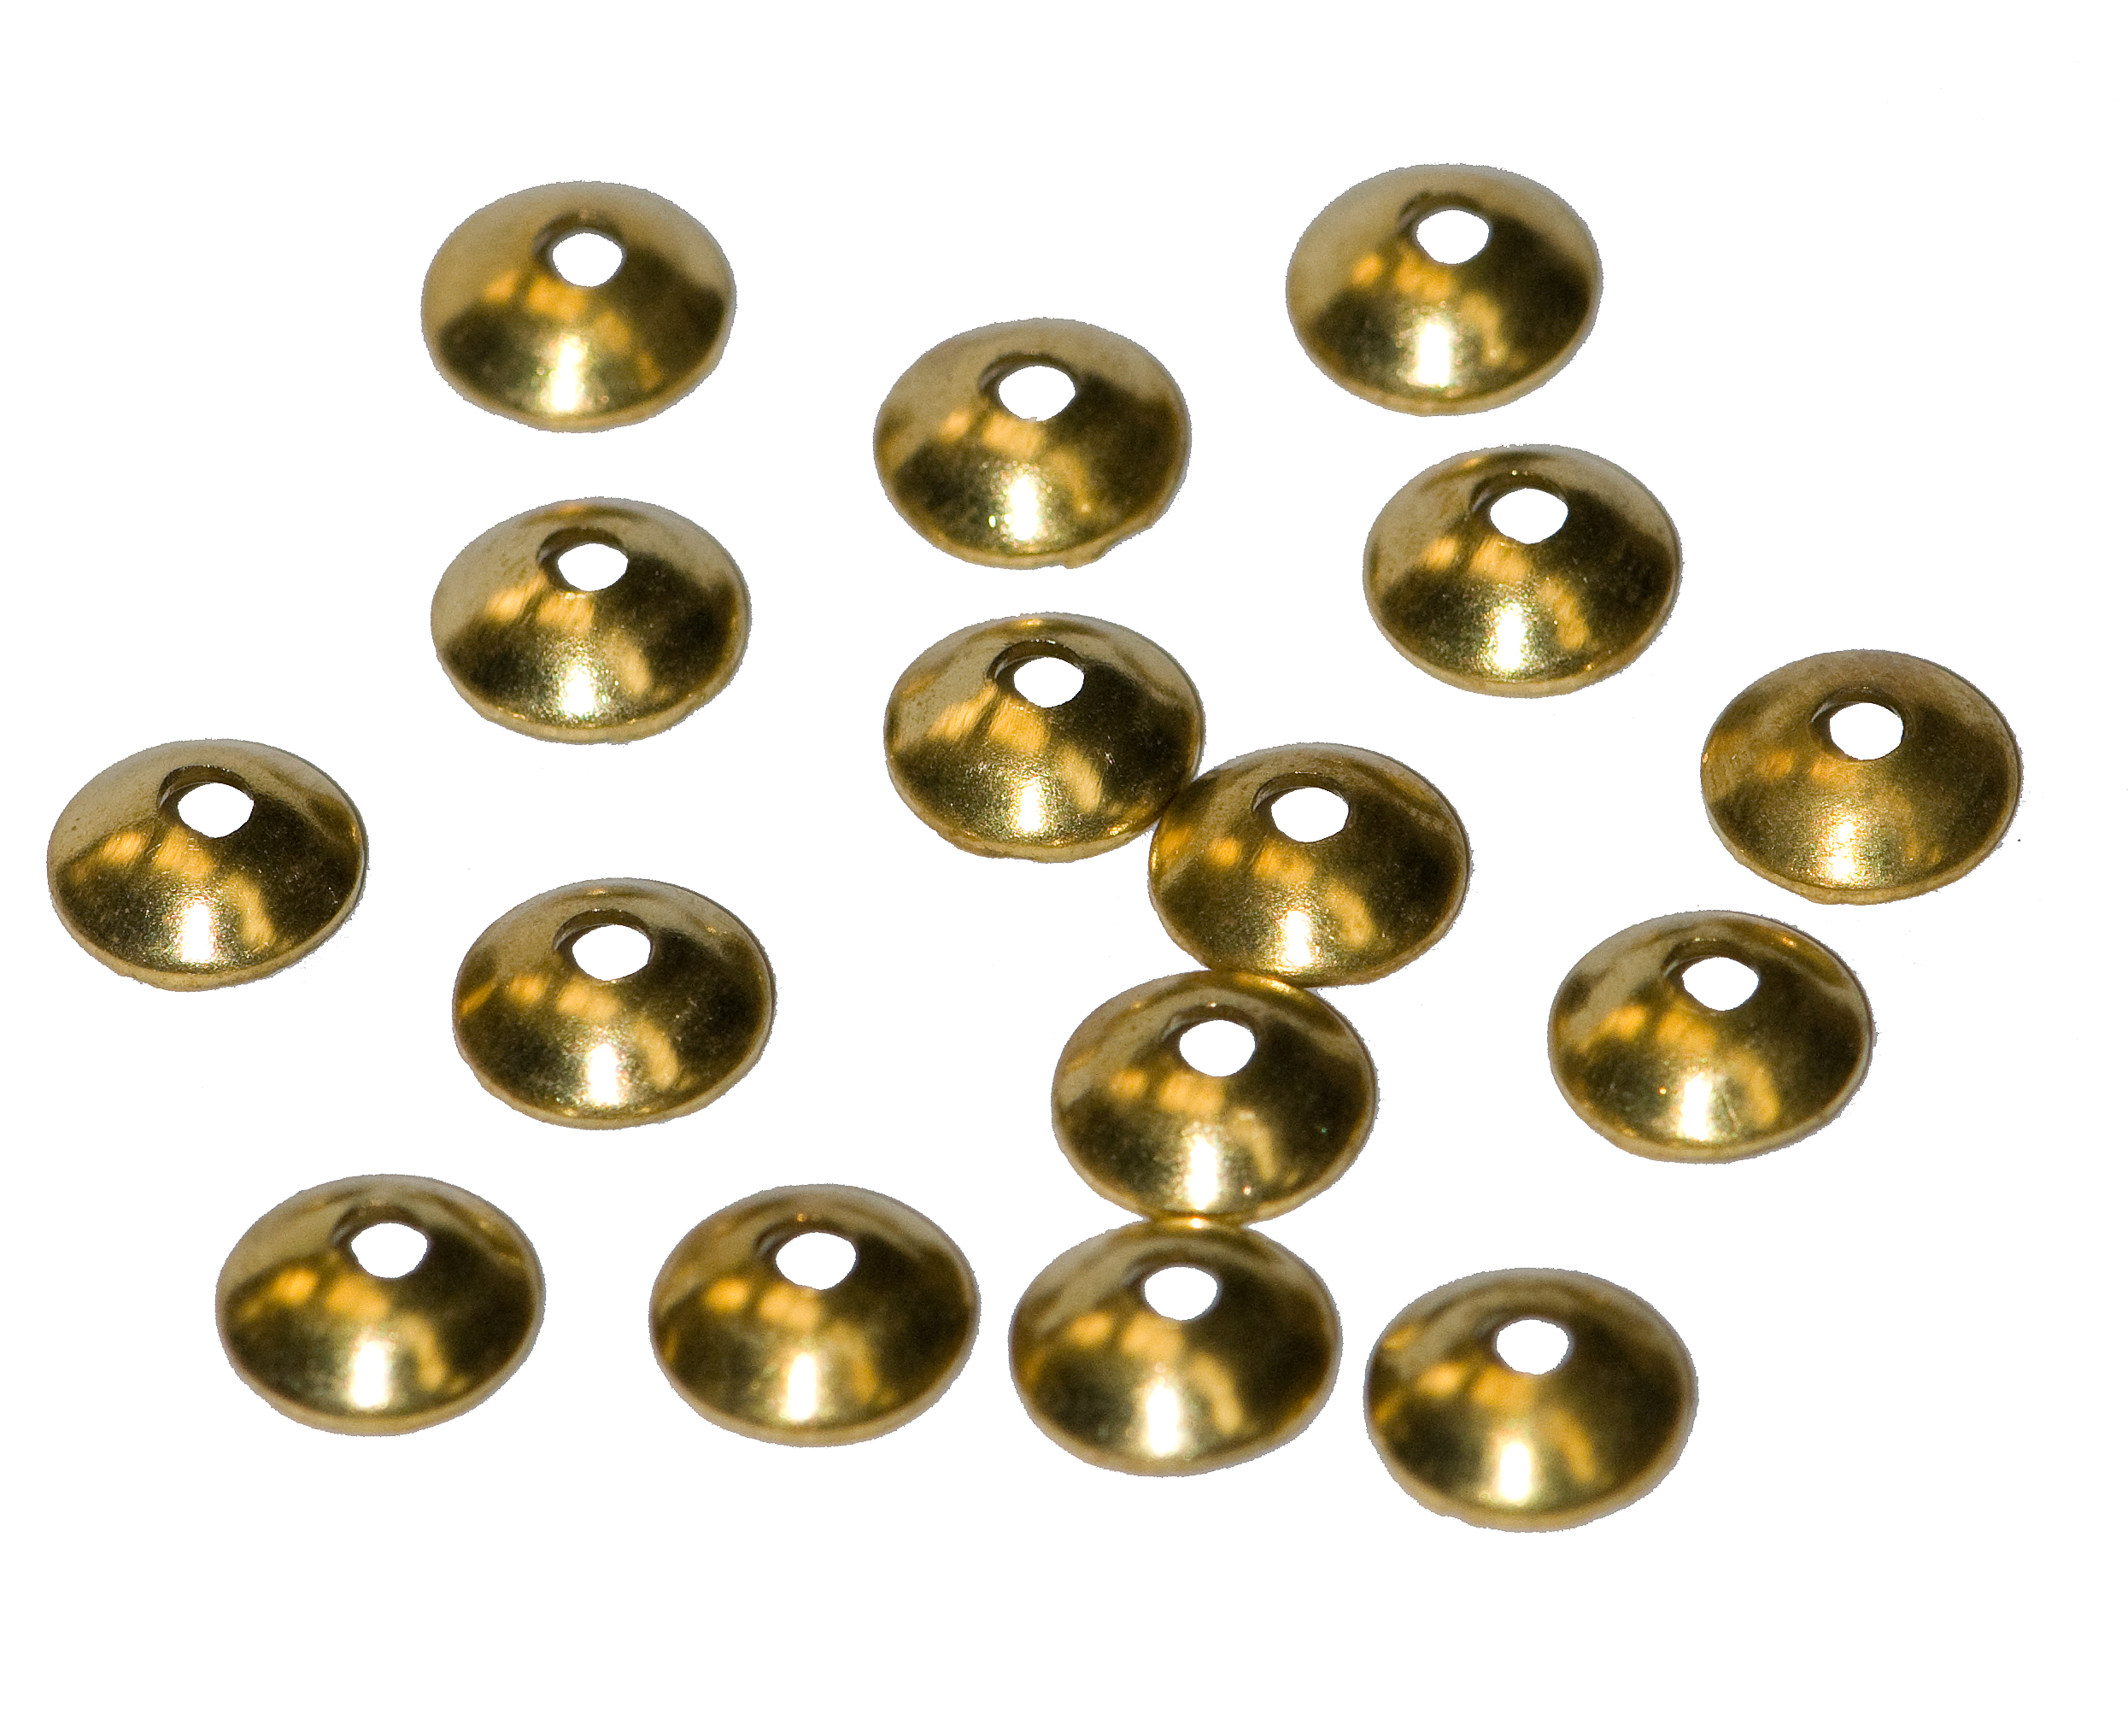 Brass rivets